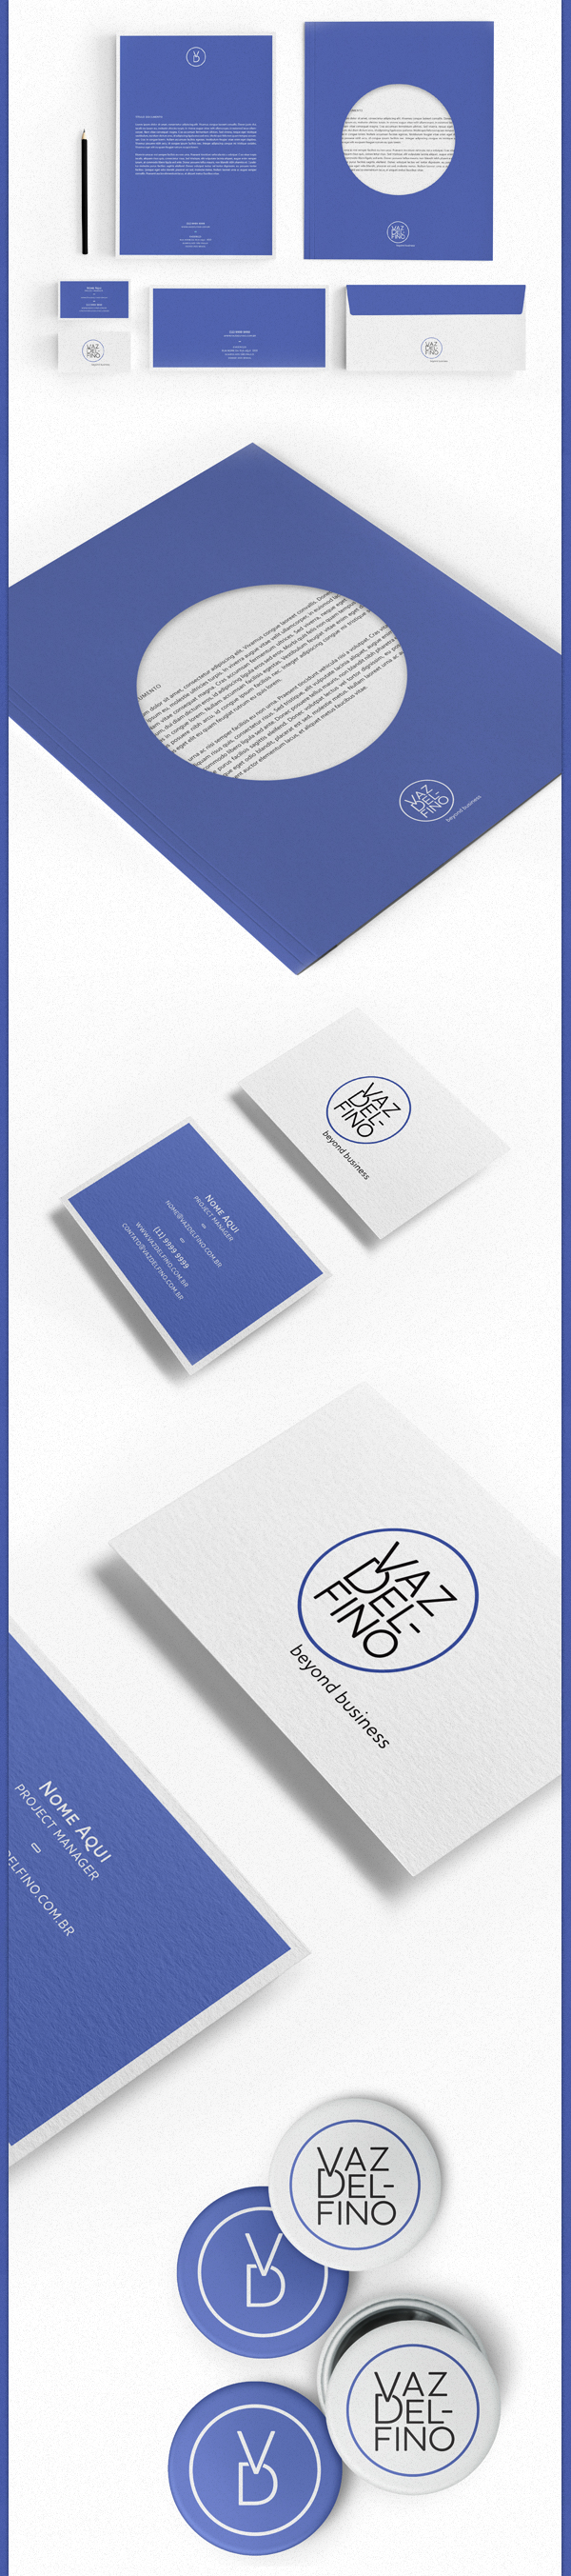 agency identity logotipo agencia Logotype agencia naming clean creative blue simple minimalist